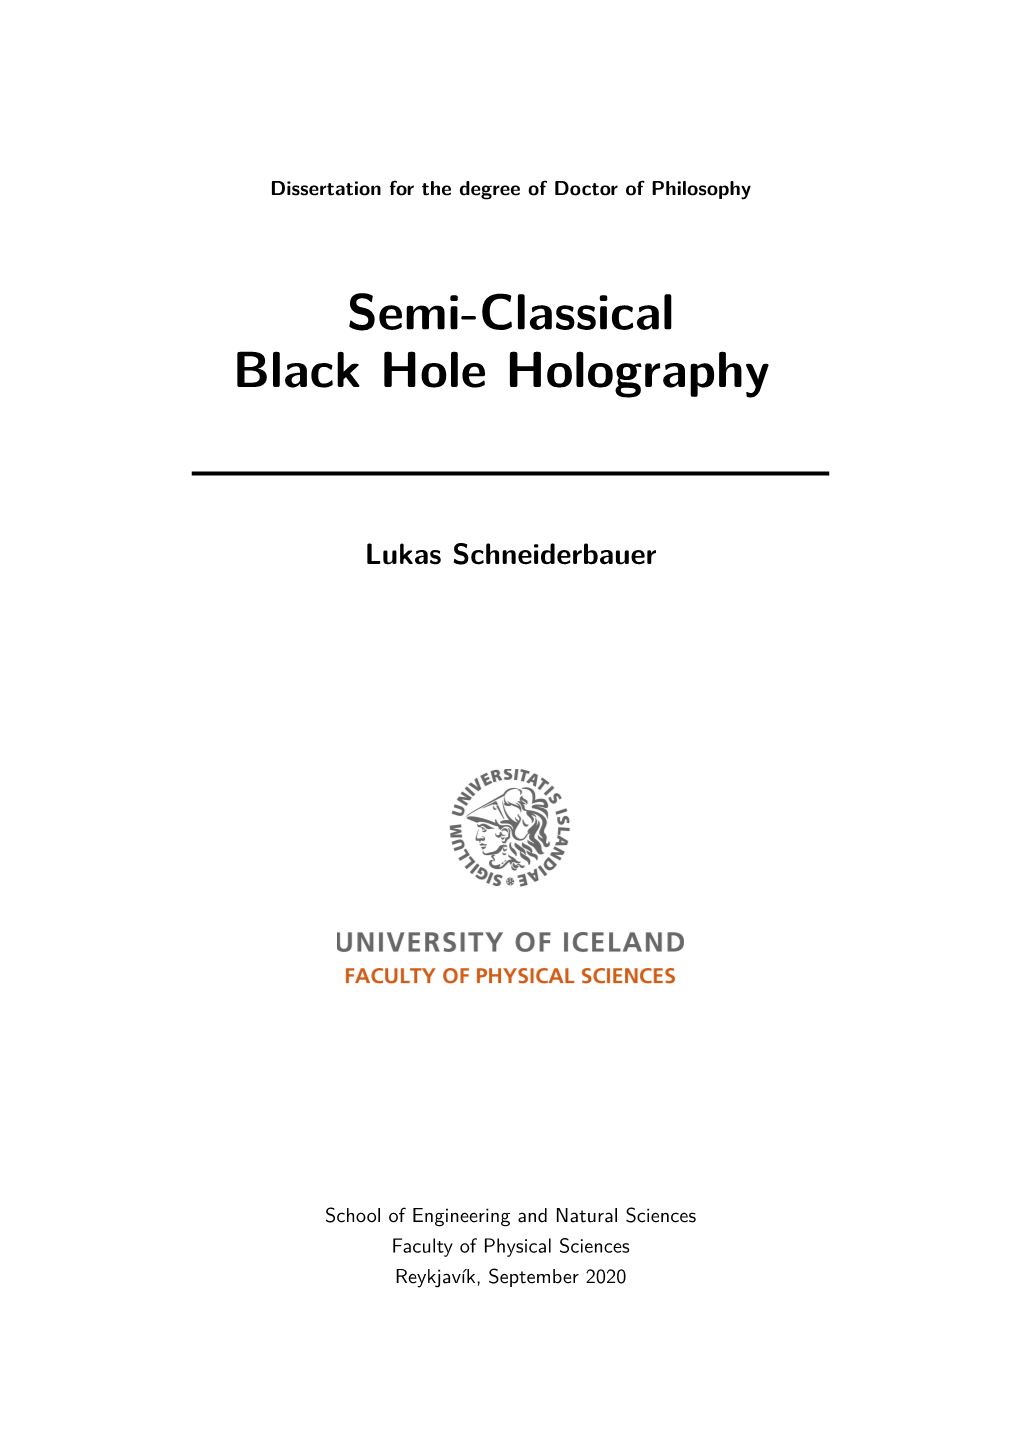 Semi-Classical Black Hole Holography